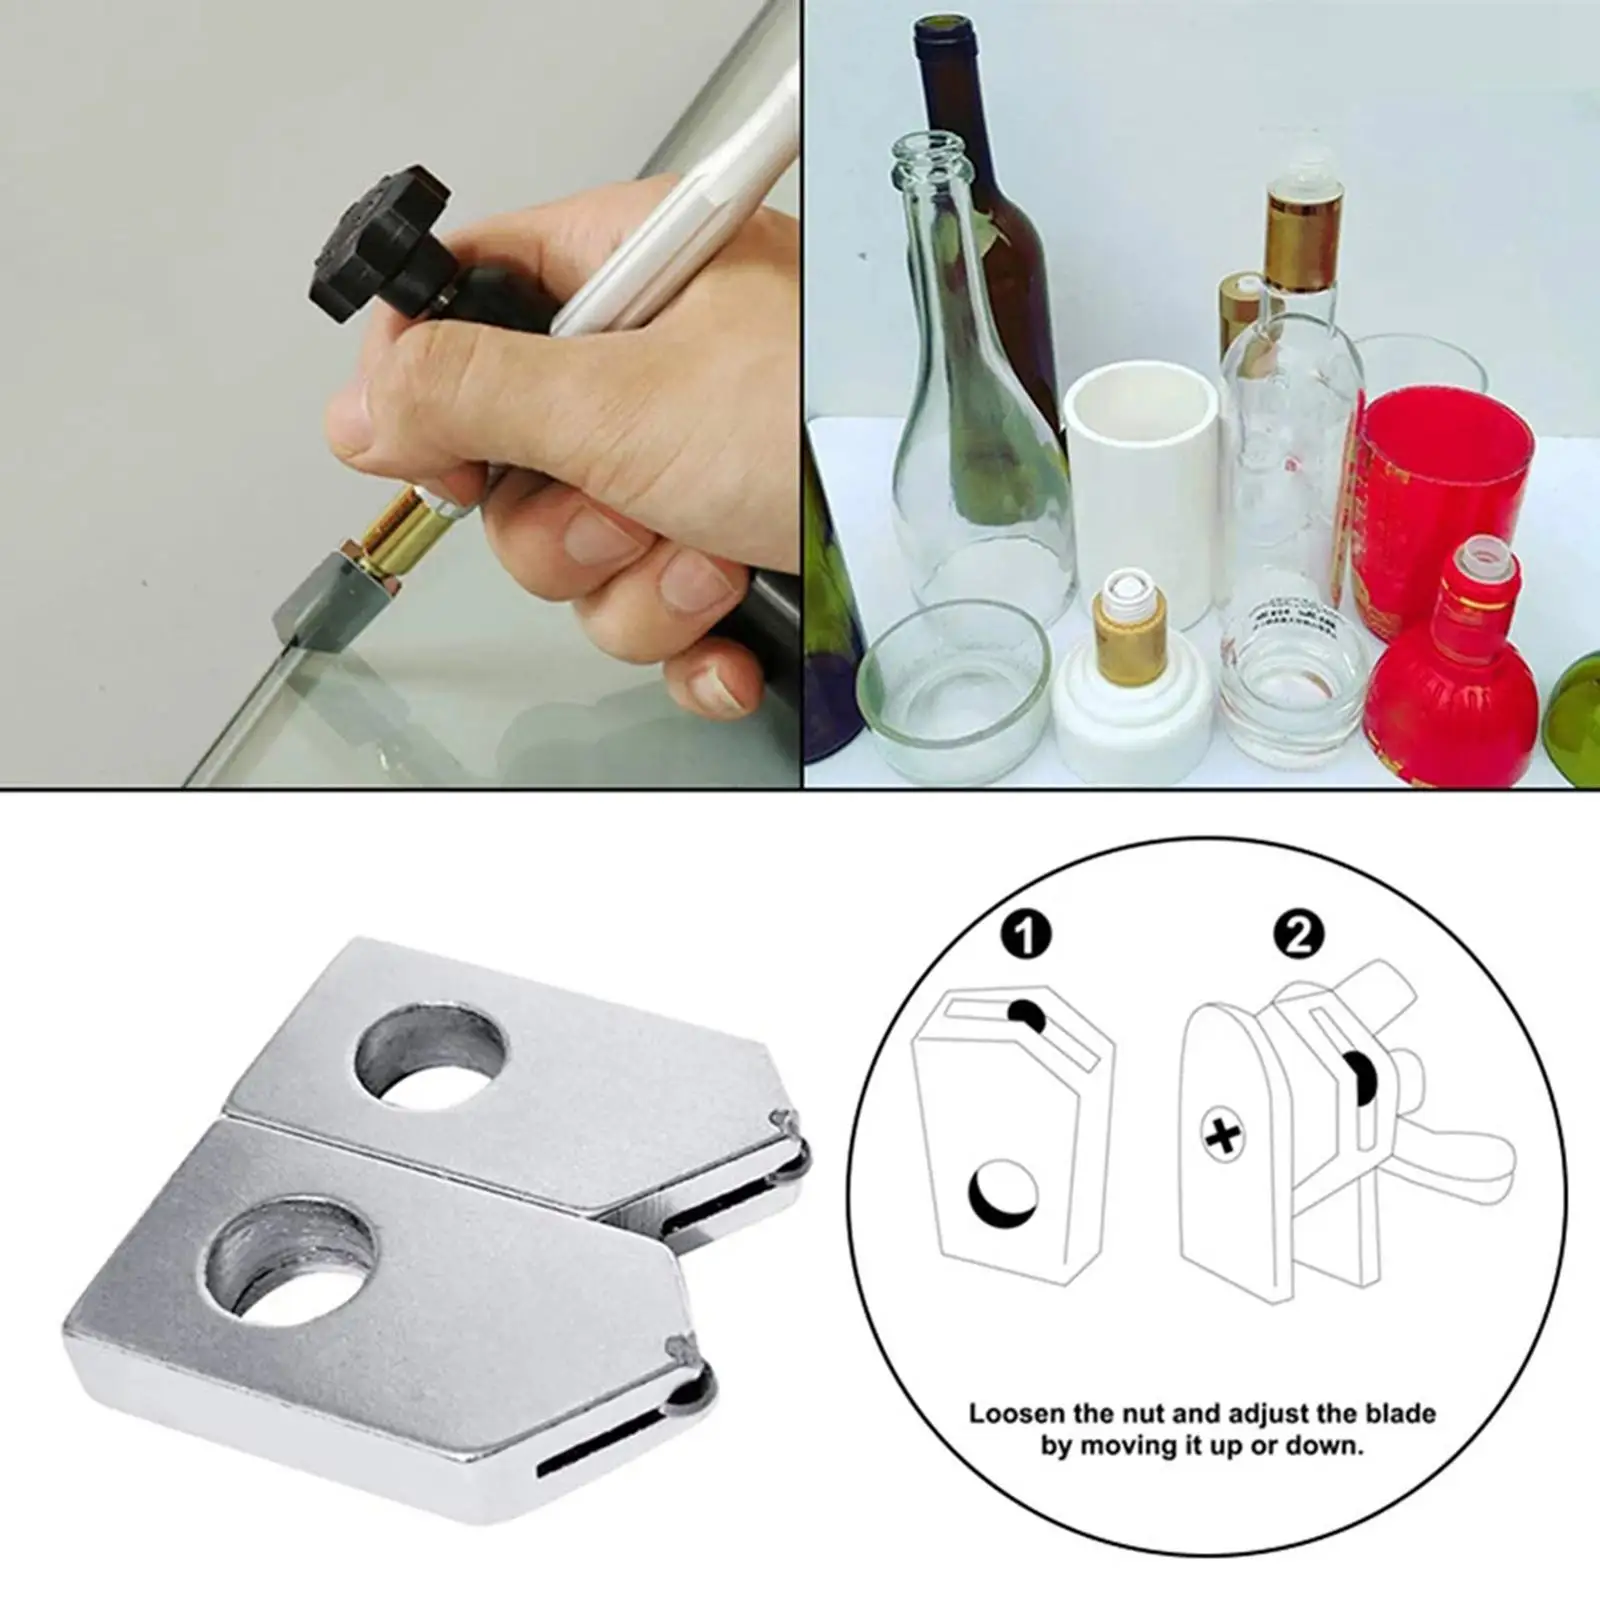 2x Glass Cutter Tool Replacement Blade, High Performance Replacement Blade for Glass Bottle Cutting Machine